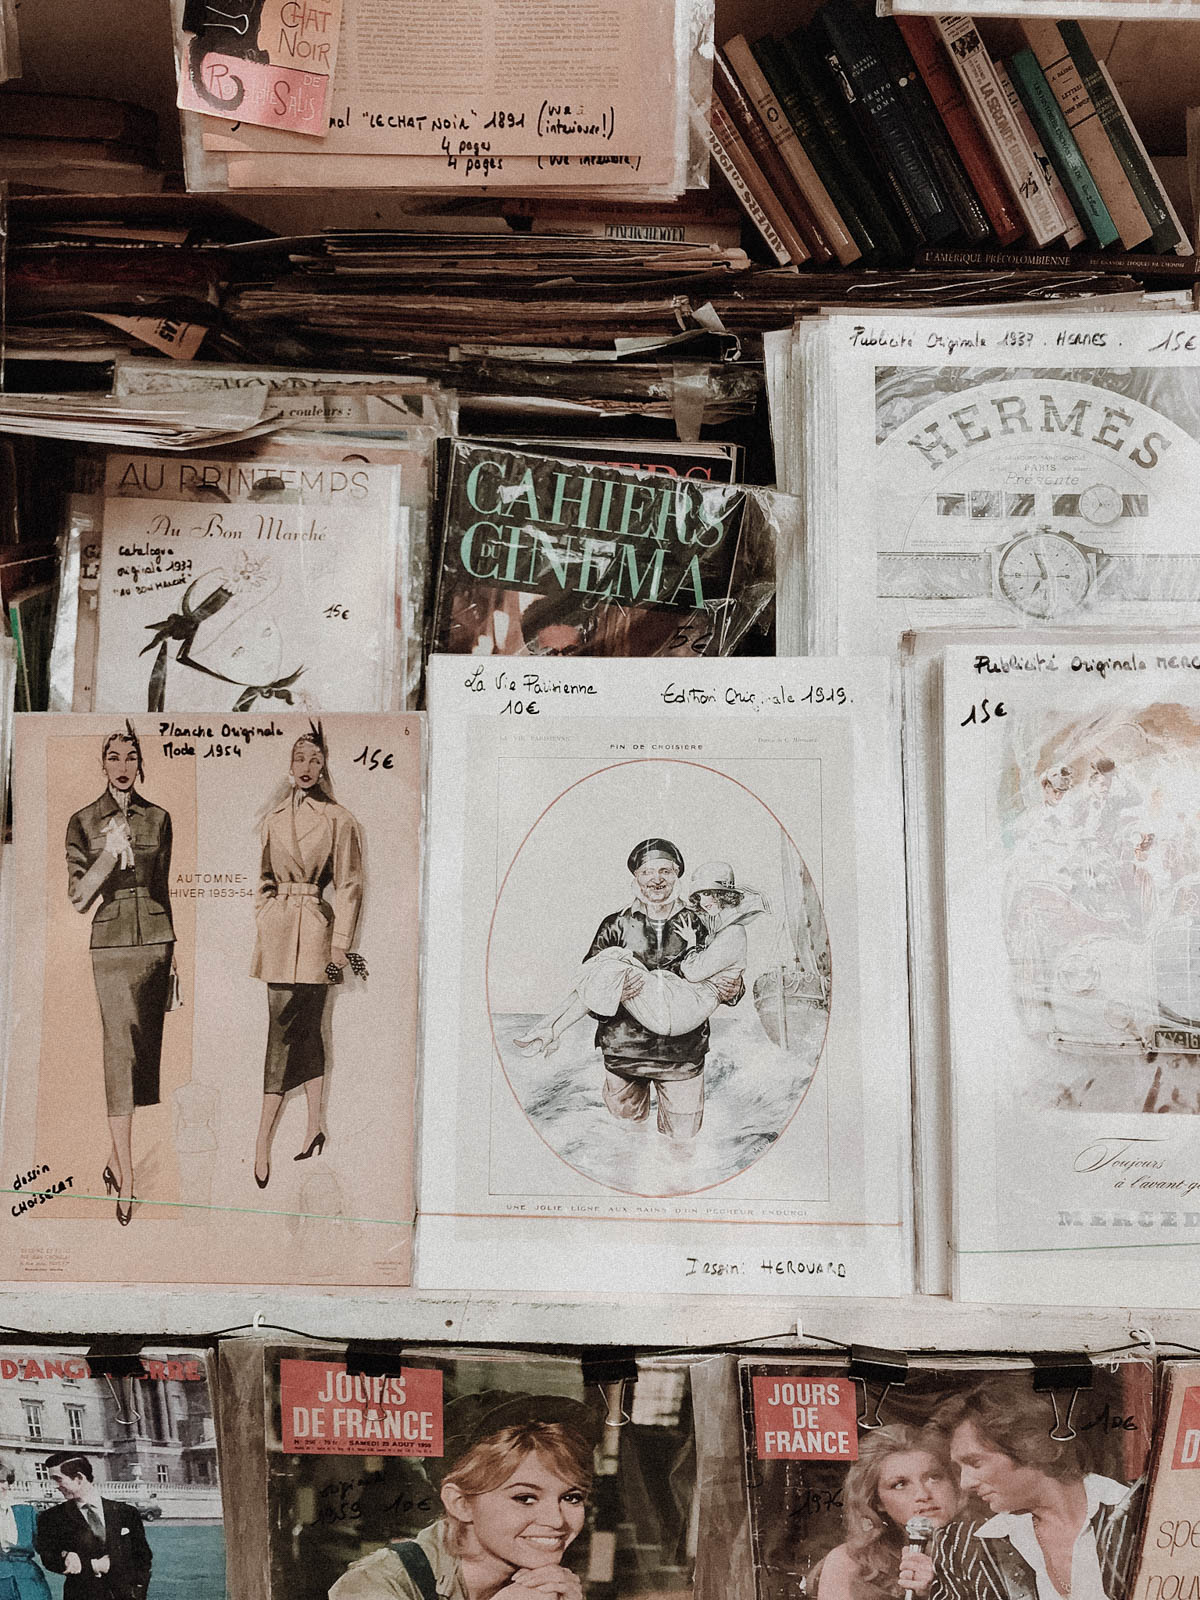 Paris France Travel Guide - Shopping, Vintage Prints / RG Daily Blog